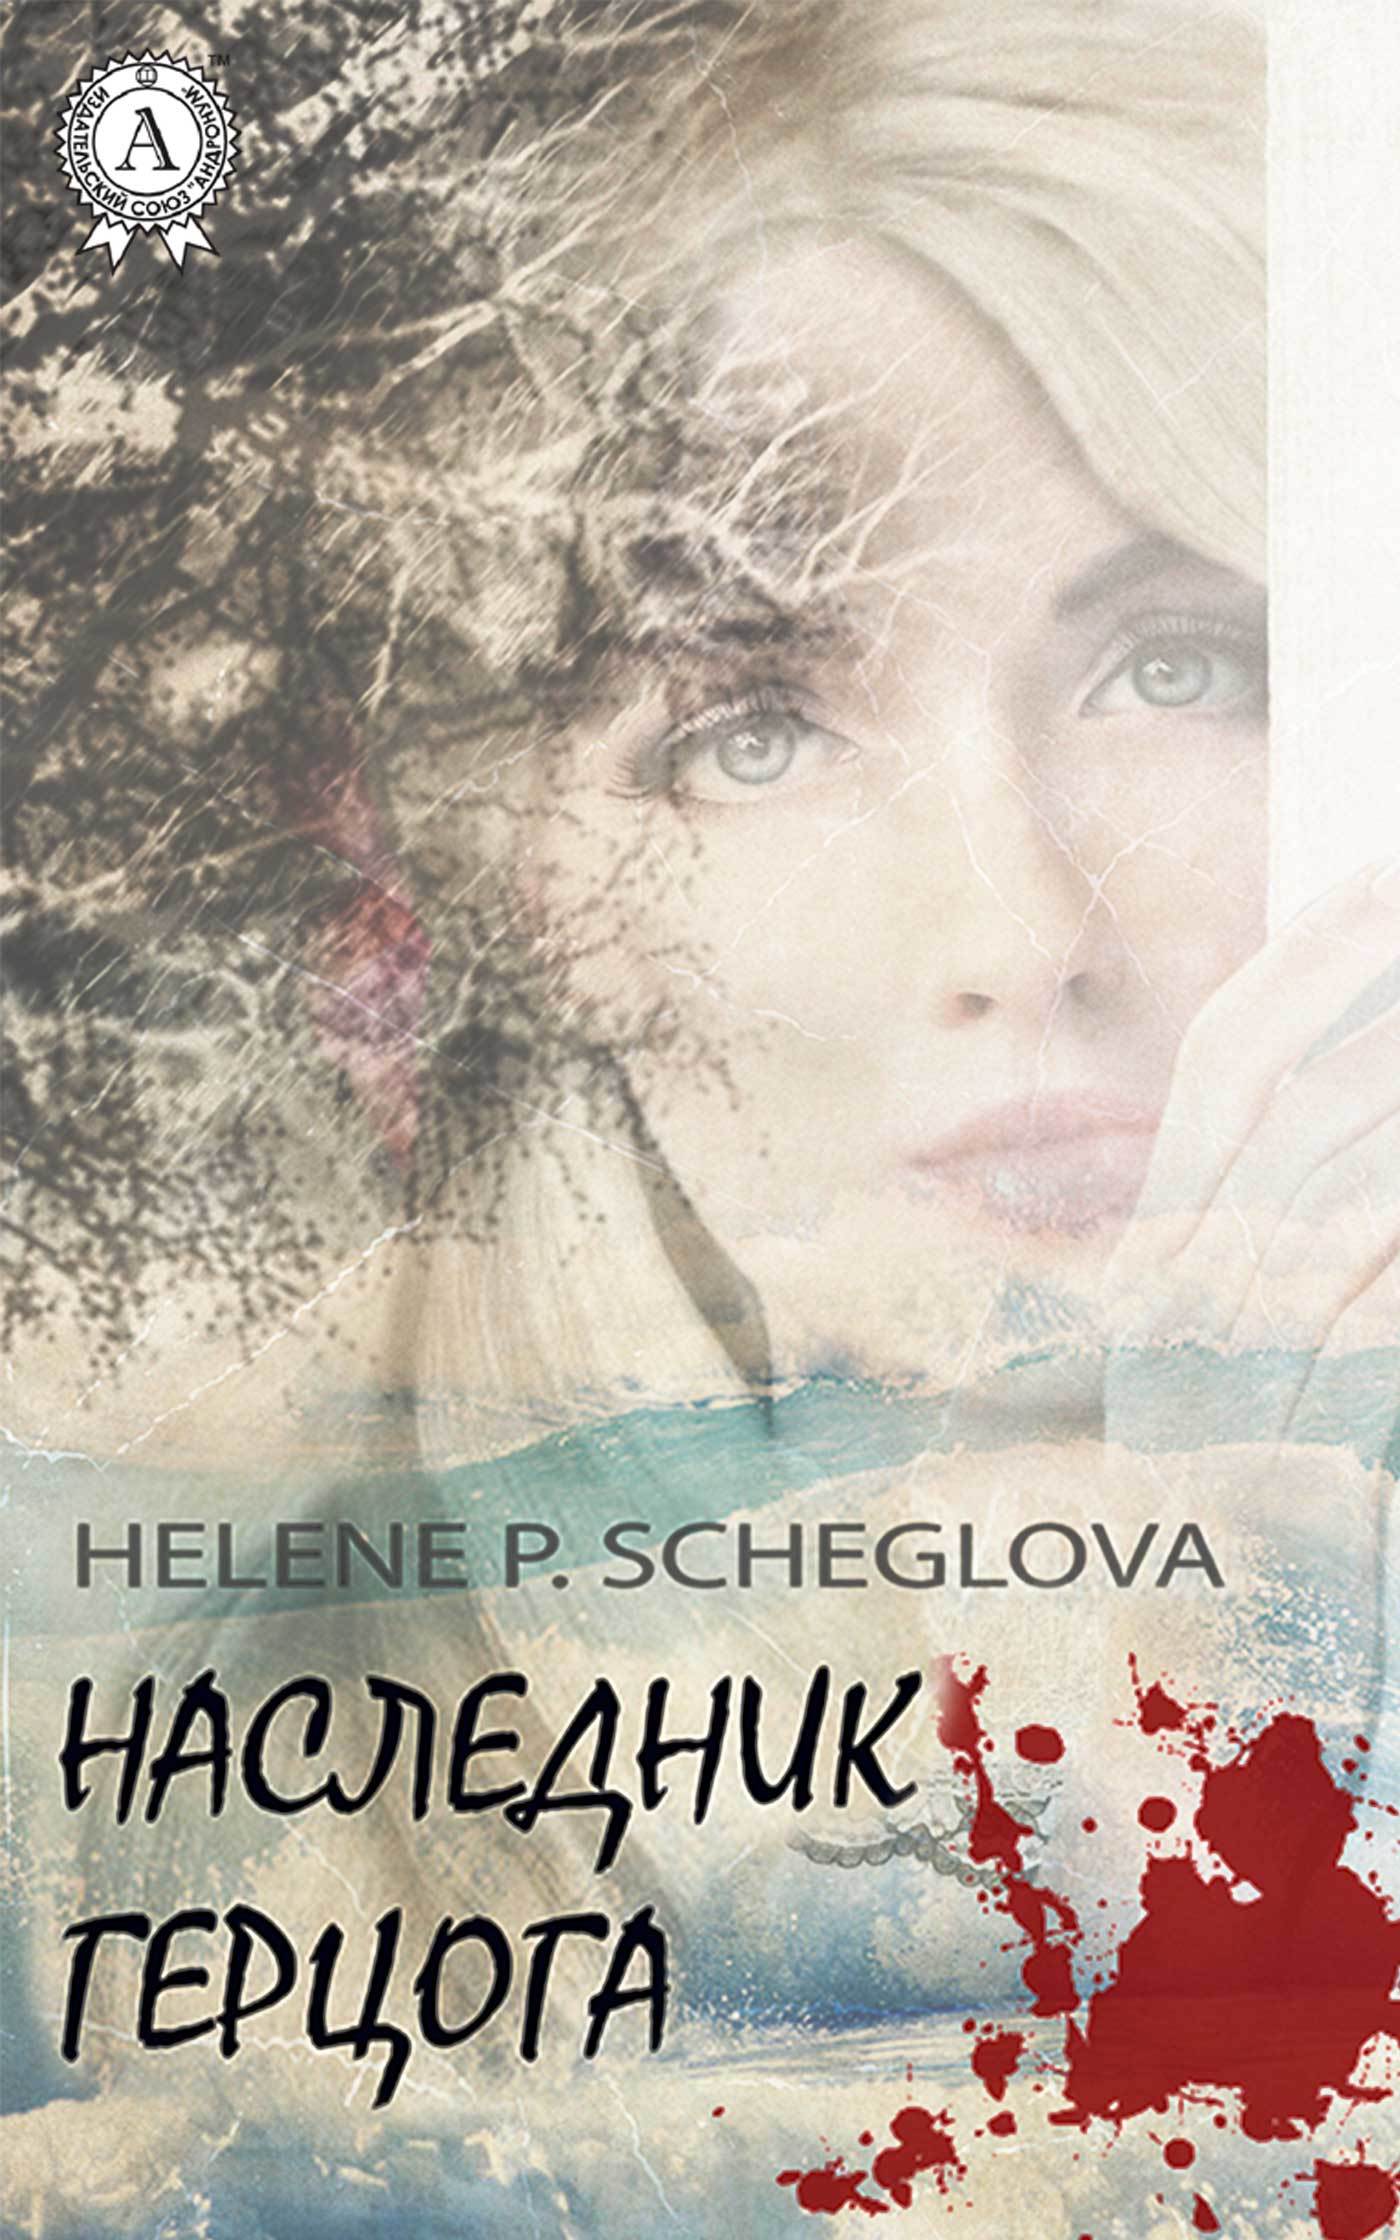 Helene P. Scheglova бесплатно